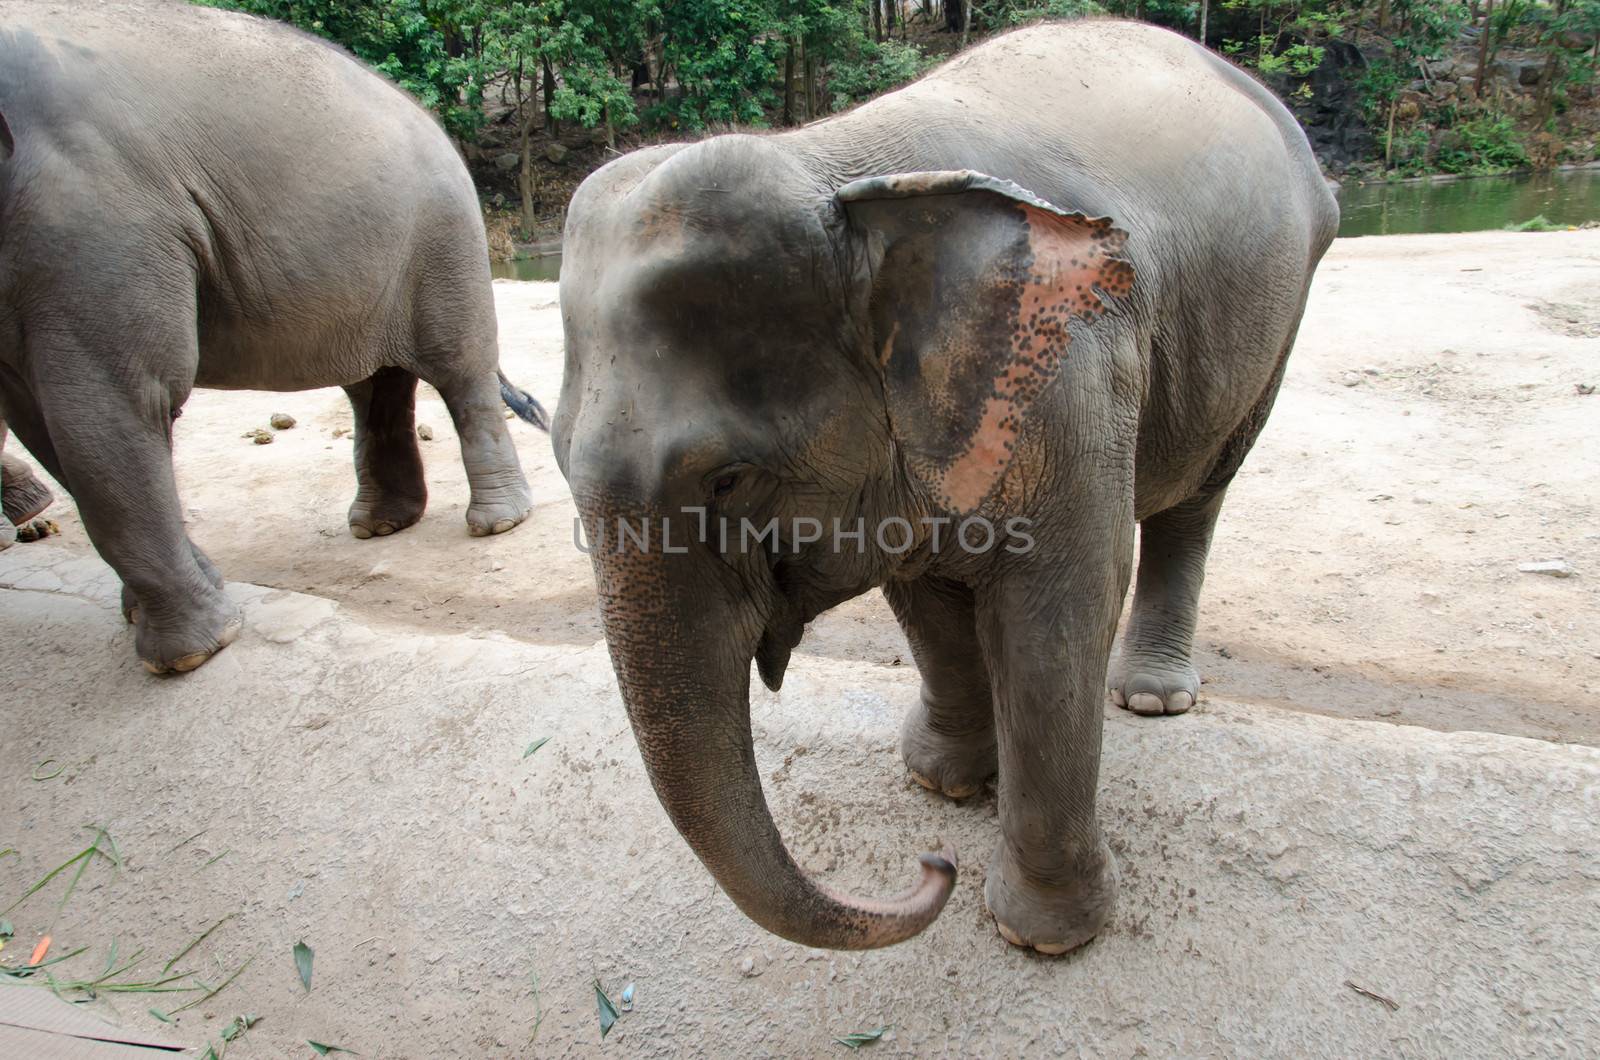 Elephant in zoo Chonburi, Thailand.